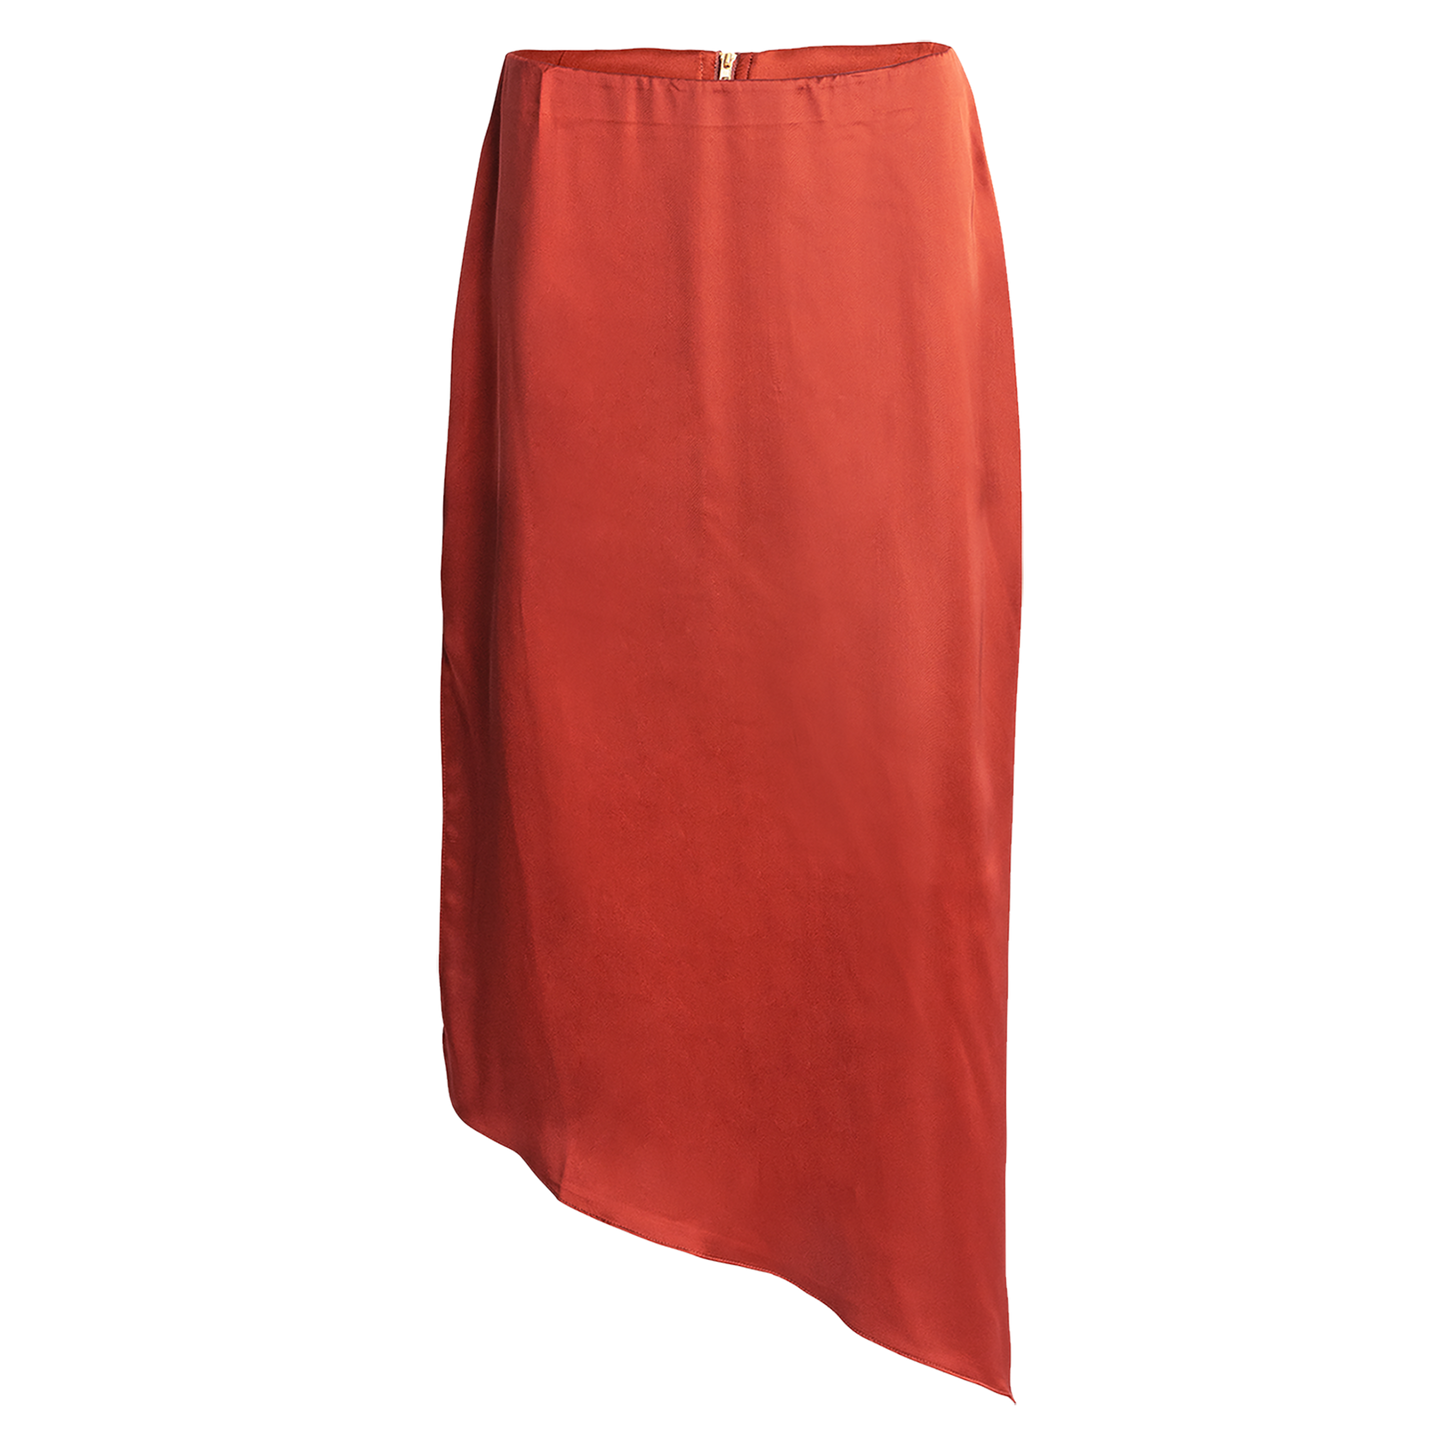 Alana Kay Asymmetrical Skirt